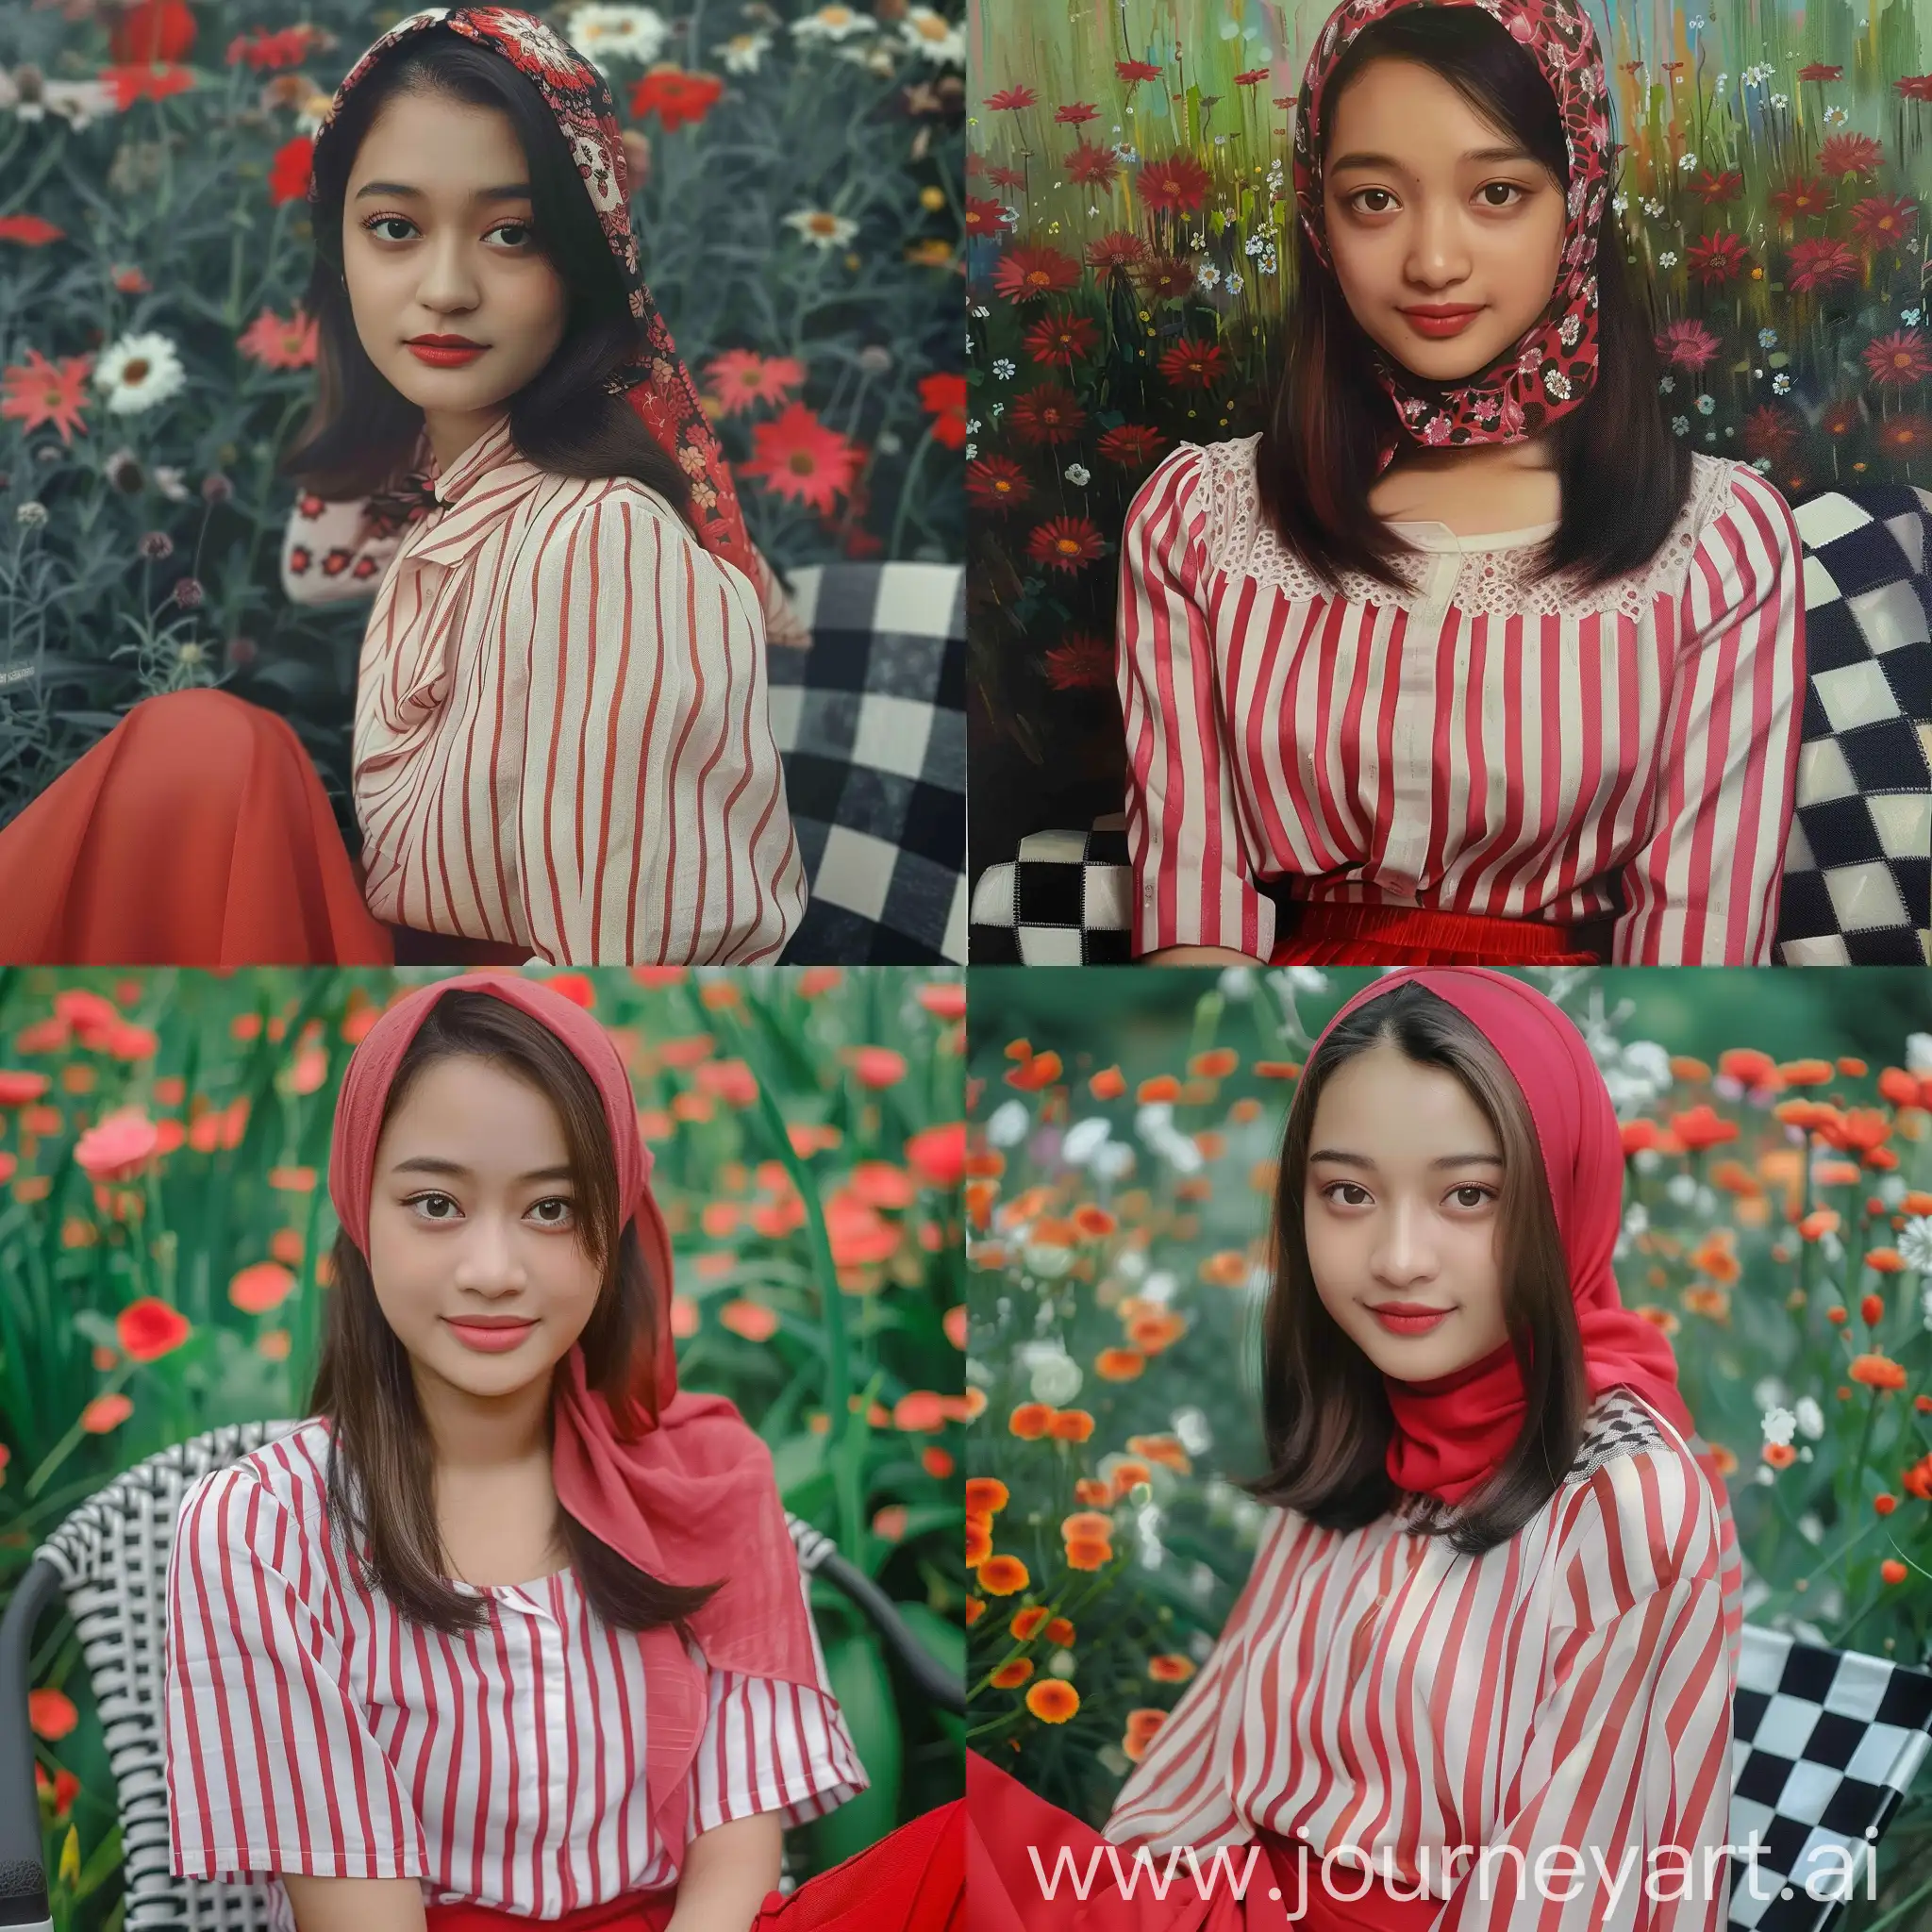 Malay-Girl-in-Red-Headscarf-Sitting-in-Flower-Garden